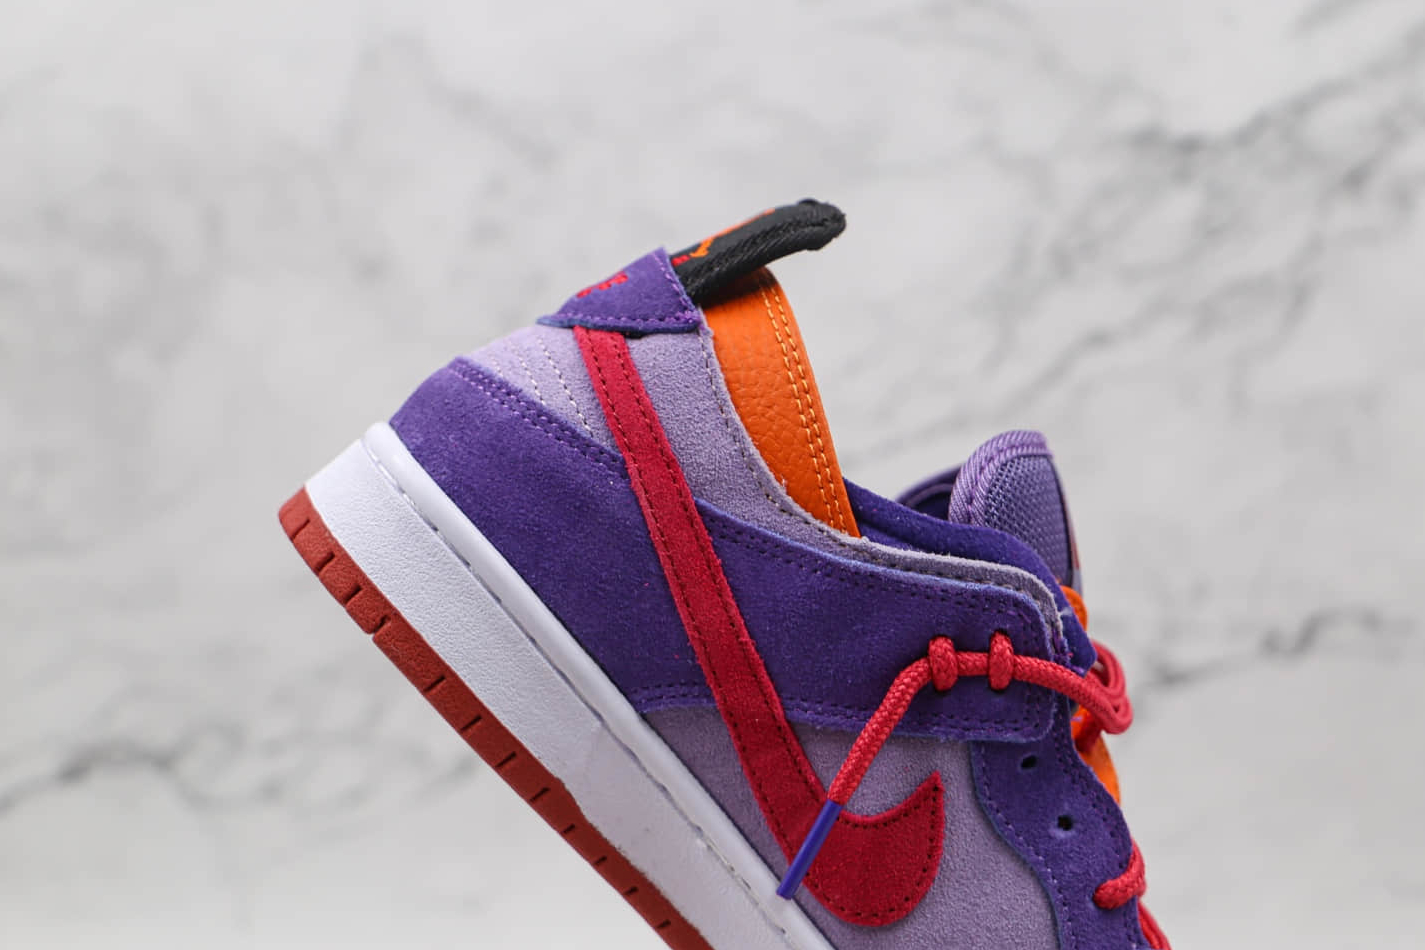 Nike Dunk SB Low Raspberry Purple - Buy the Stylish Sneakers Today